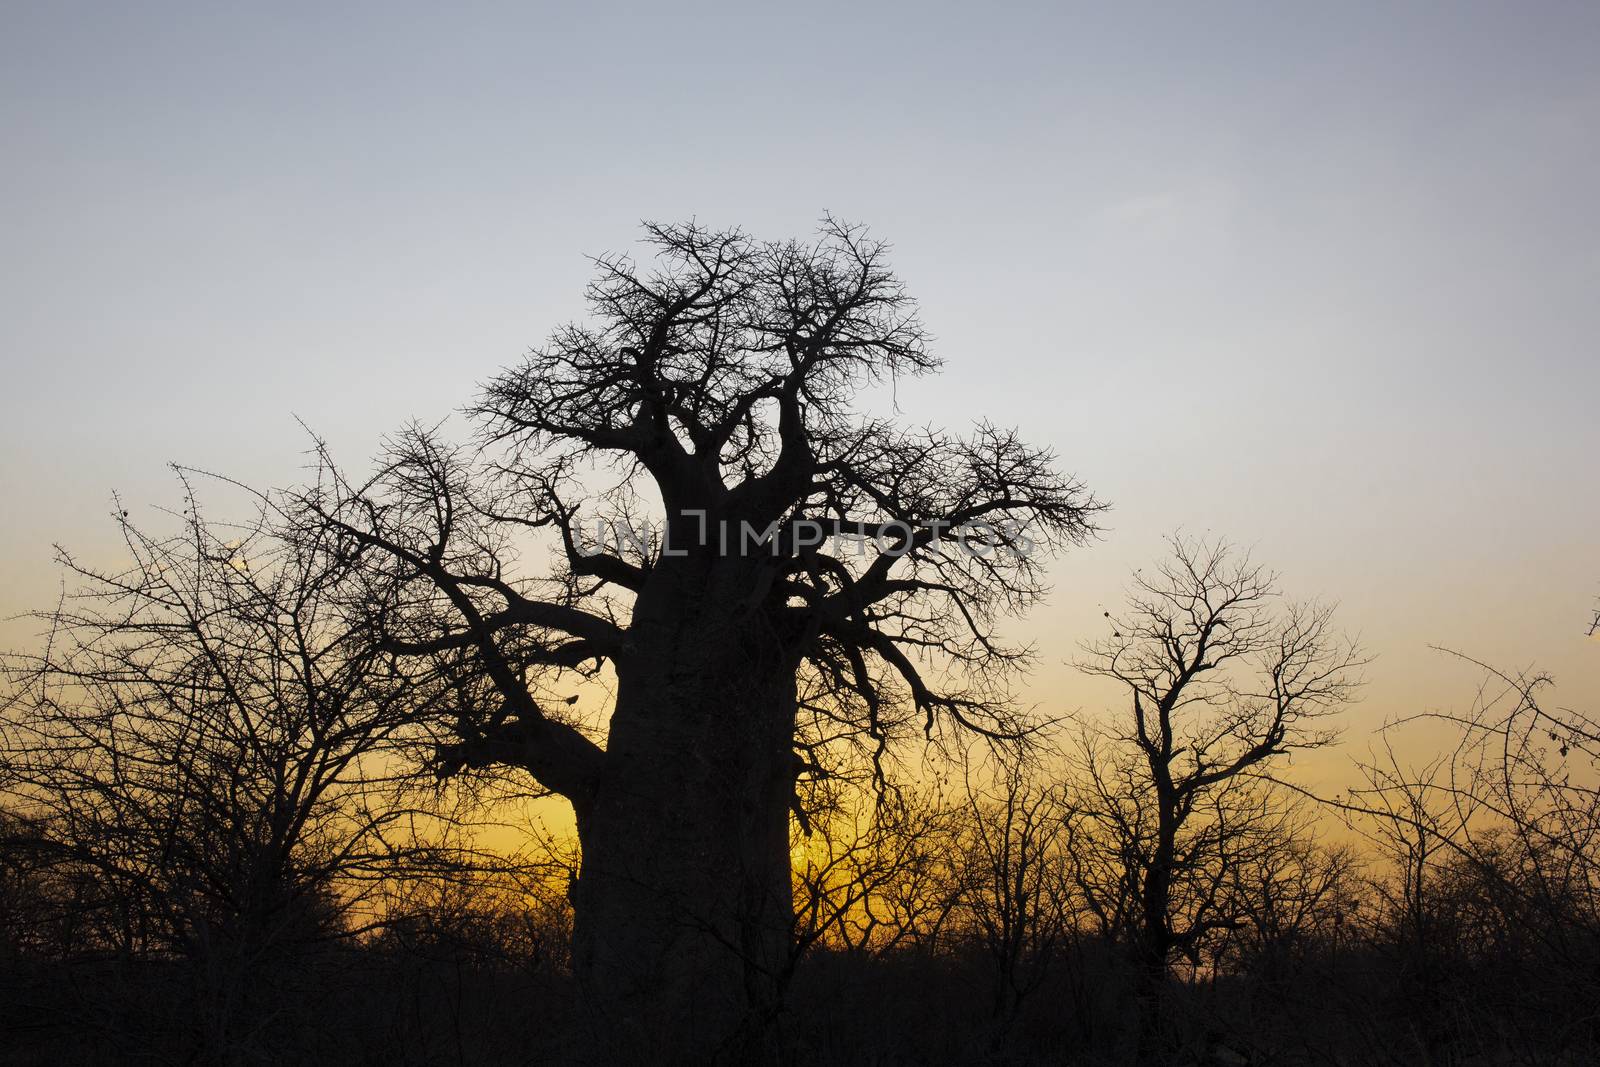 Sunrise at the Baobabs, botswana